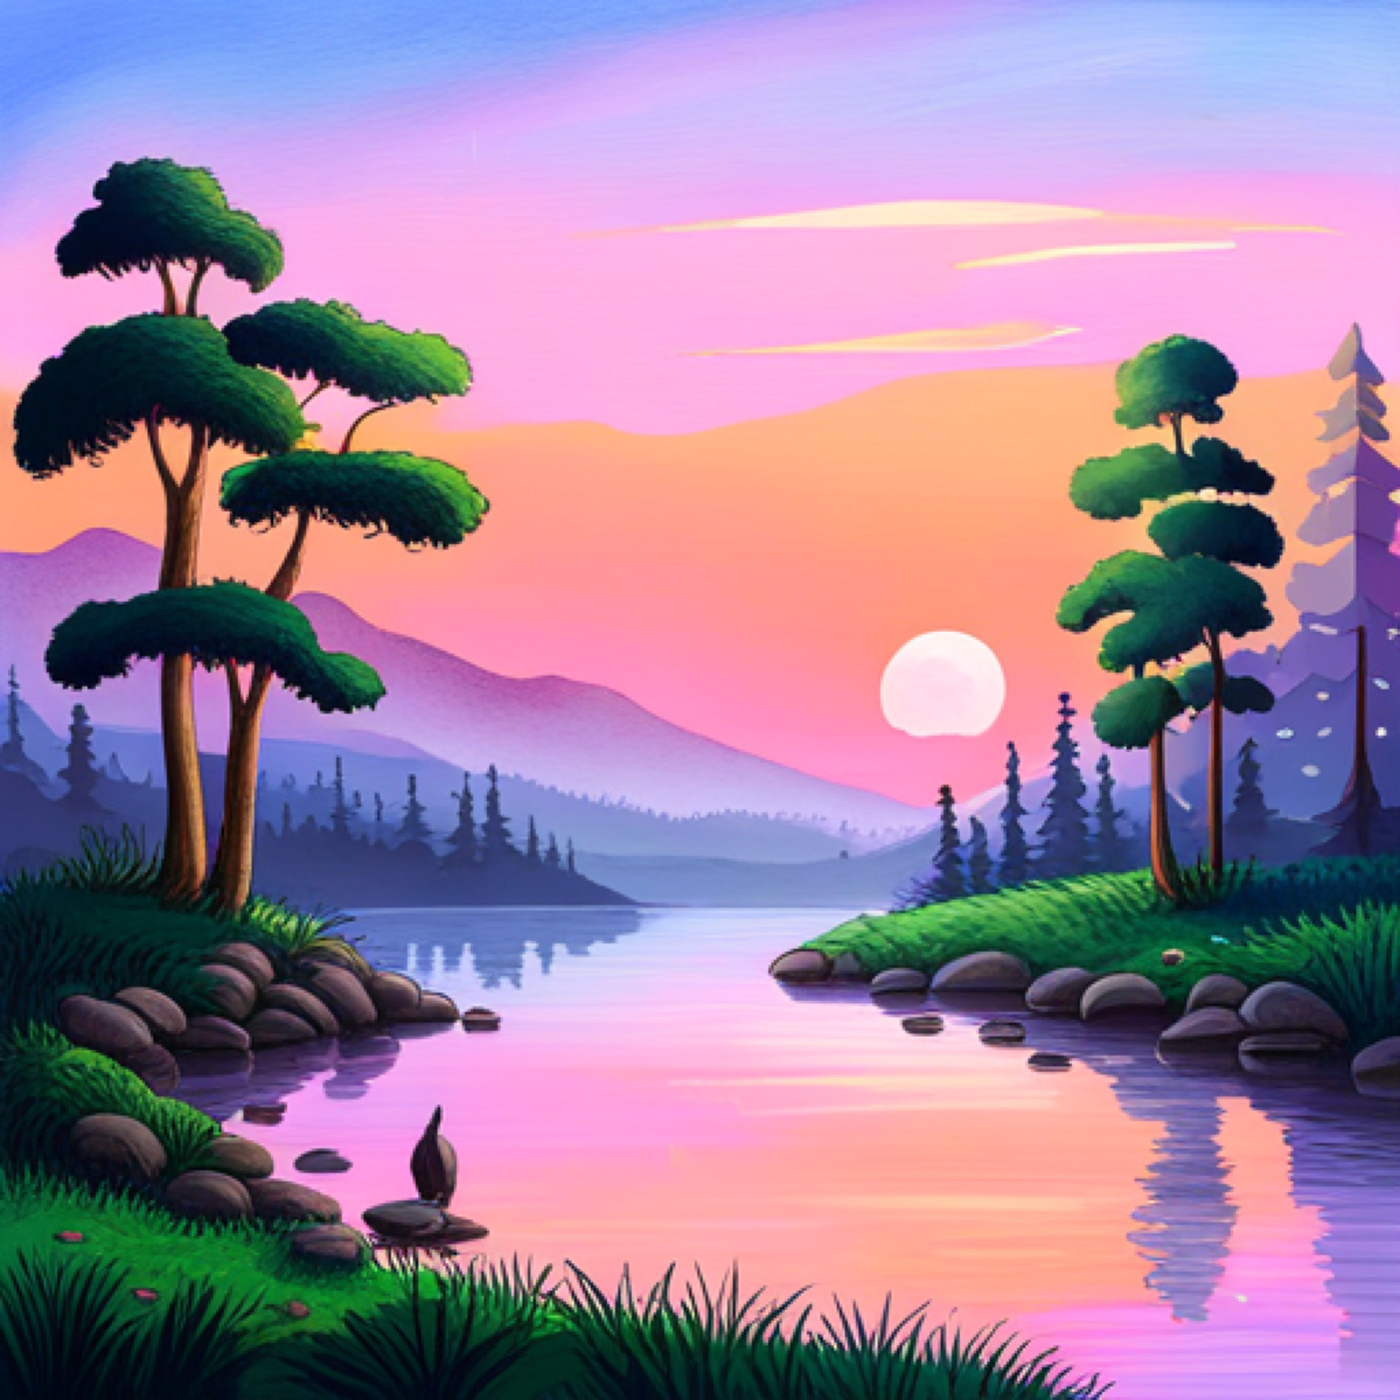 dreamy dreams dreamland imagination stunning Beautiful sunset Sunrise colorful vibrant vivid Digital Art  artwork gorgeous lake Lakeside lakefront Landscape waterscape